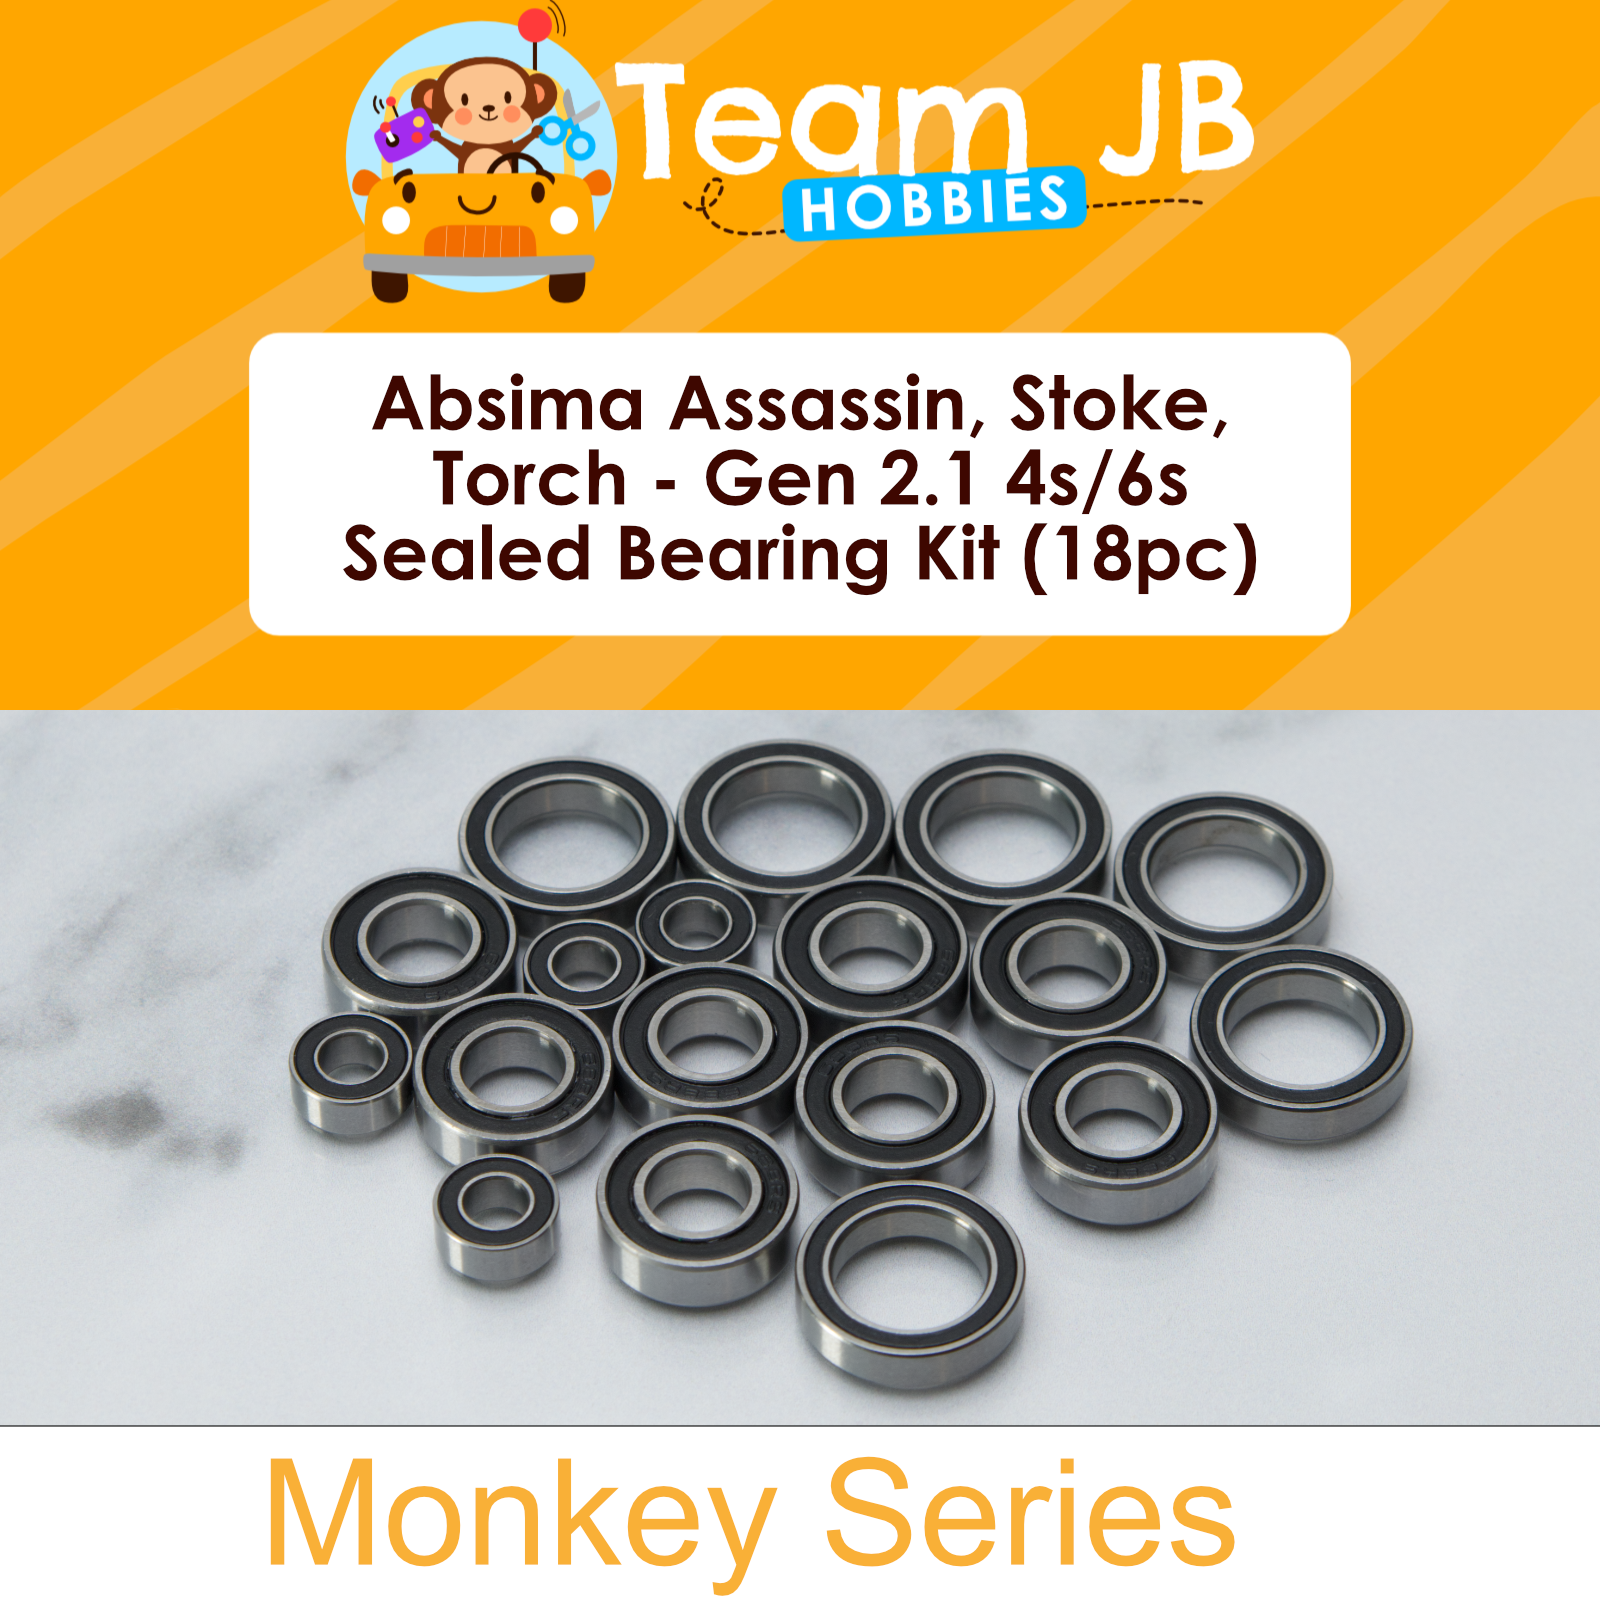 Absima Assassin, Stoke, Torch - Gen 2.1 4s/6s - Sealed Bearing Kit